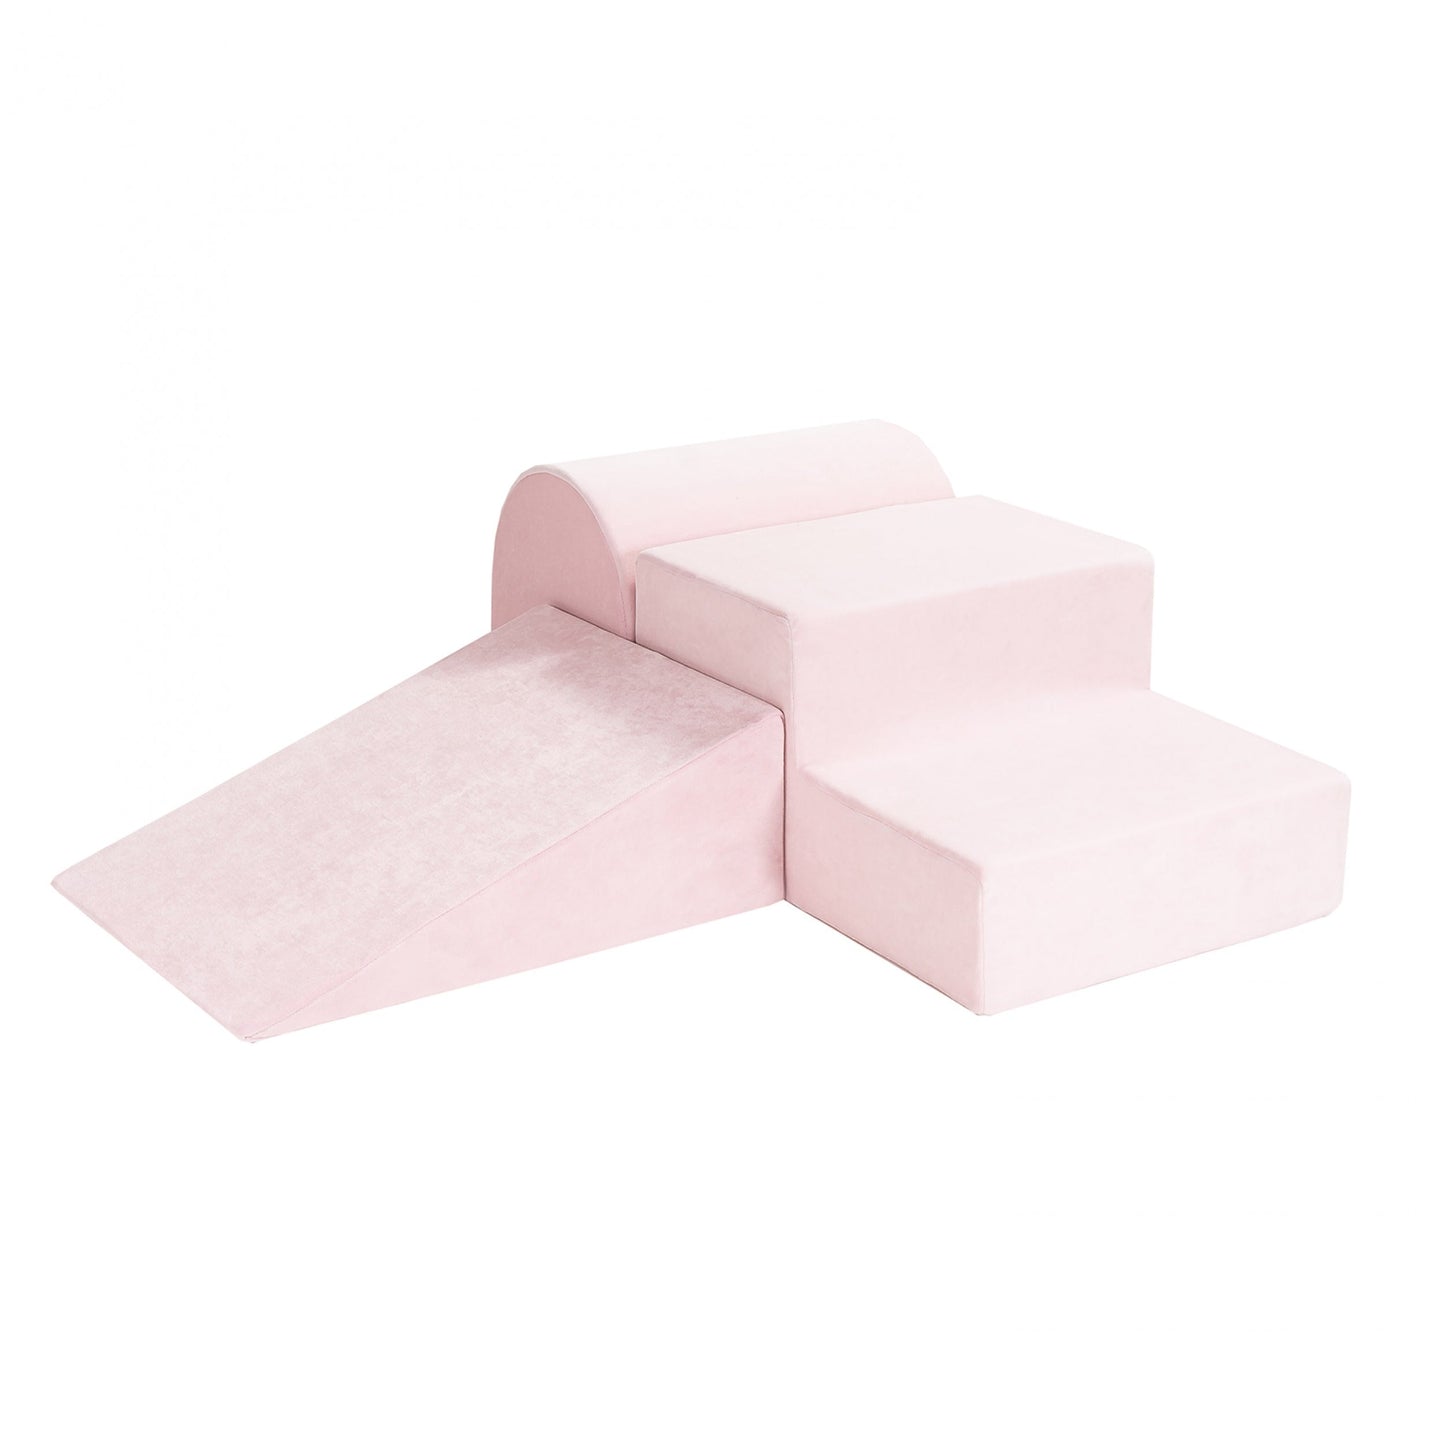 3 delige roze foam speelset zonder ballenbak